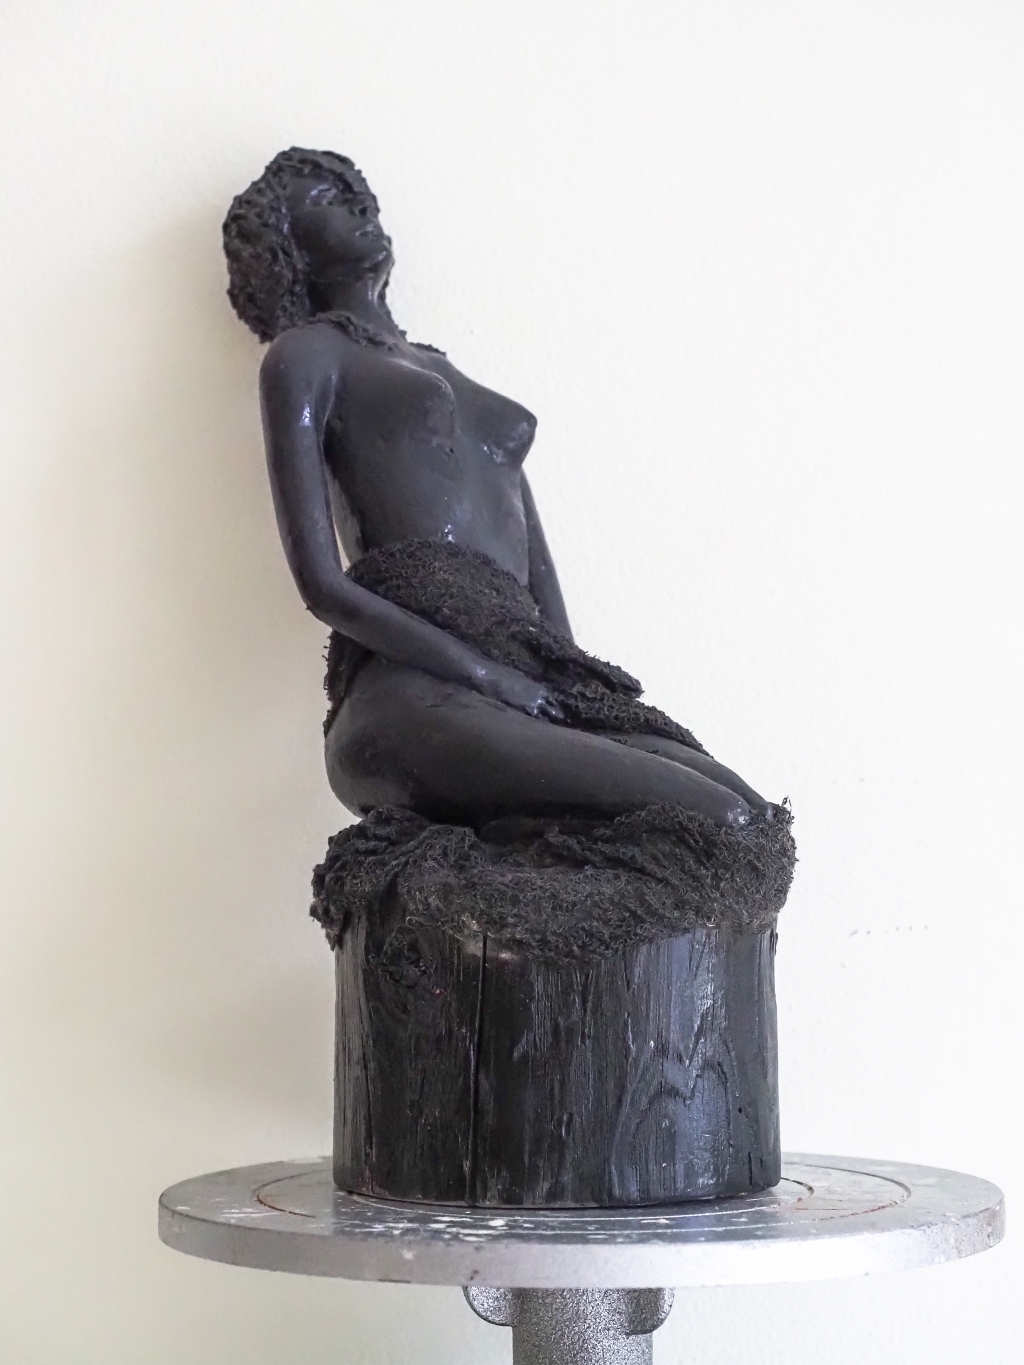 Skulptur weiblich schwarz  Material/Medium: Papiermache`, Holzmehl, Holz  Malmedium: Öl, Acryl  Gesamthöhe: 28cm   Datiert: 2018/Signiert   Verkauft 